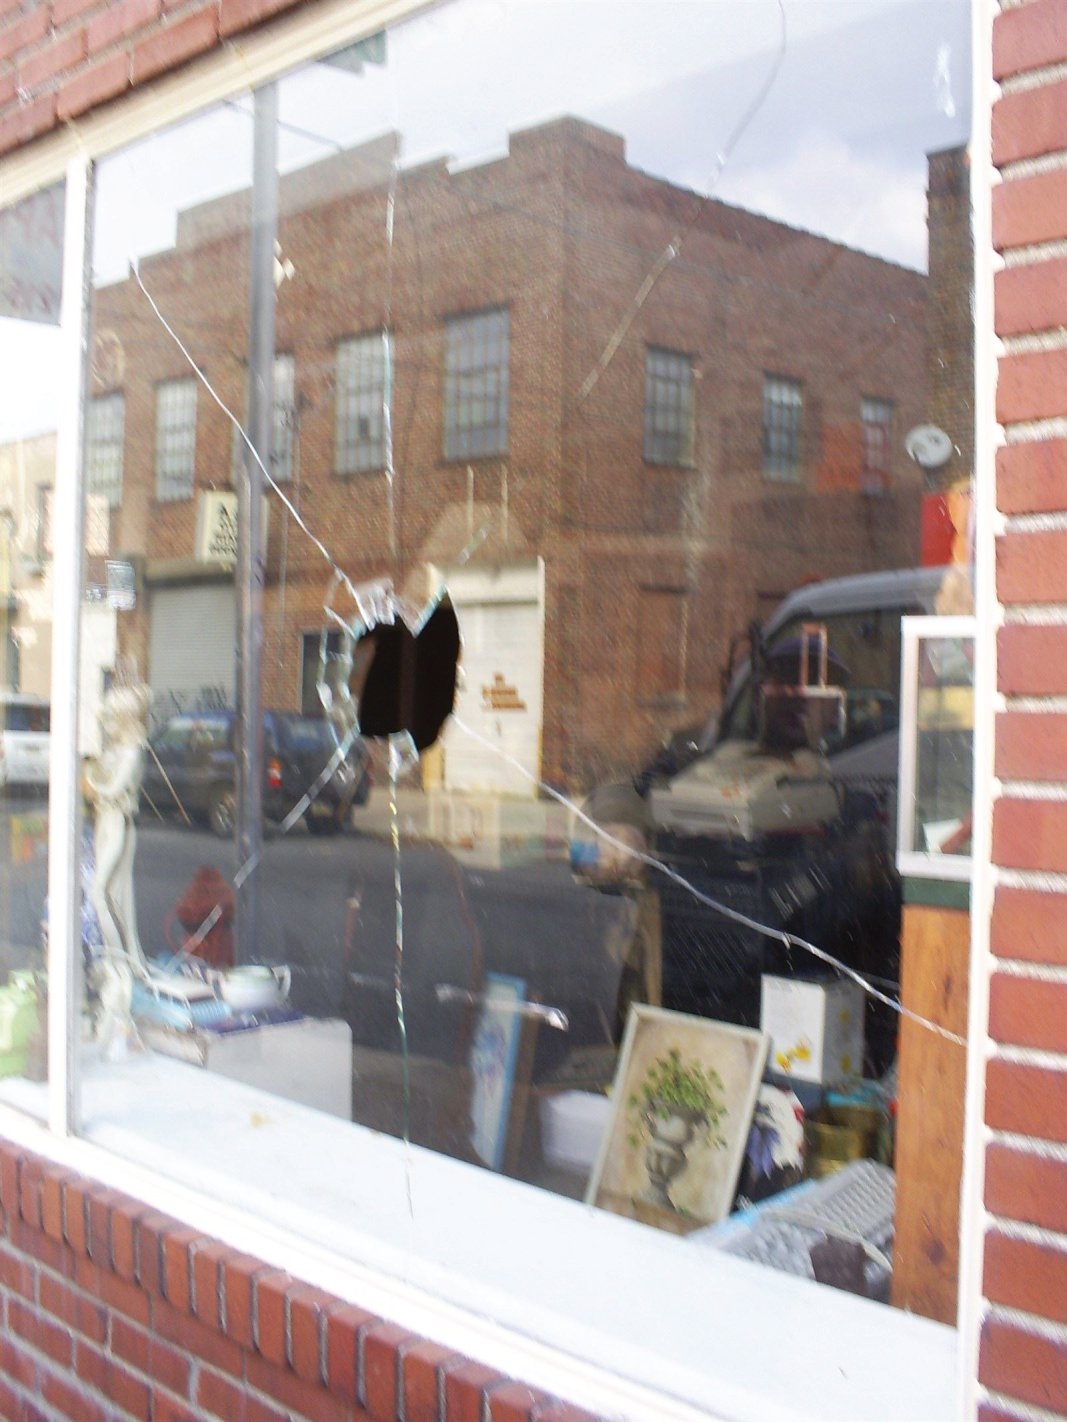 Broken window repair Philadelphia Pa & suburbs